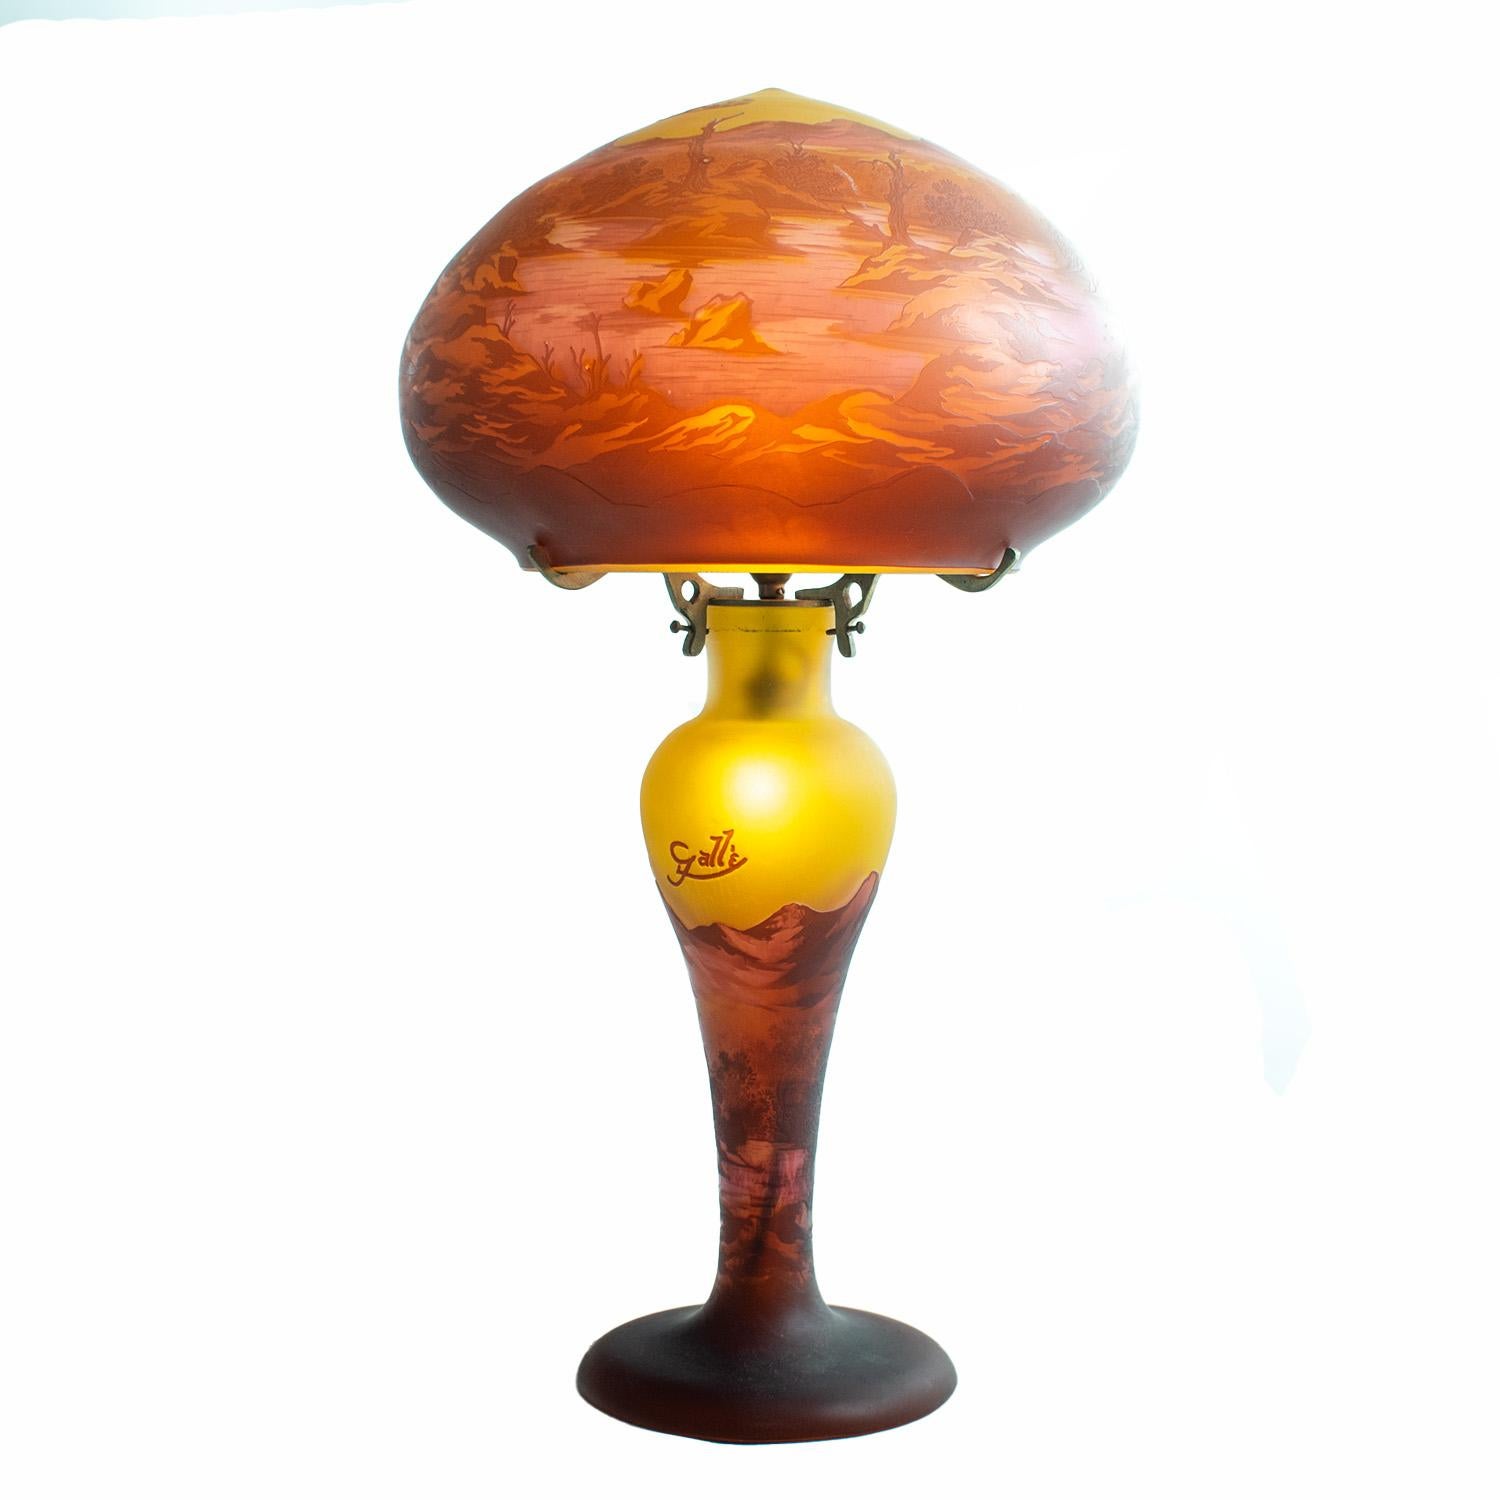 French Gallè Tip - Impressive Large ART NOUVEAU MUSHROOM LAMP in multilayer glass For Sale